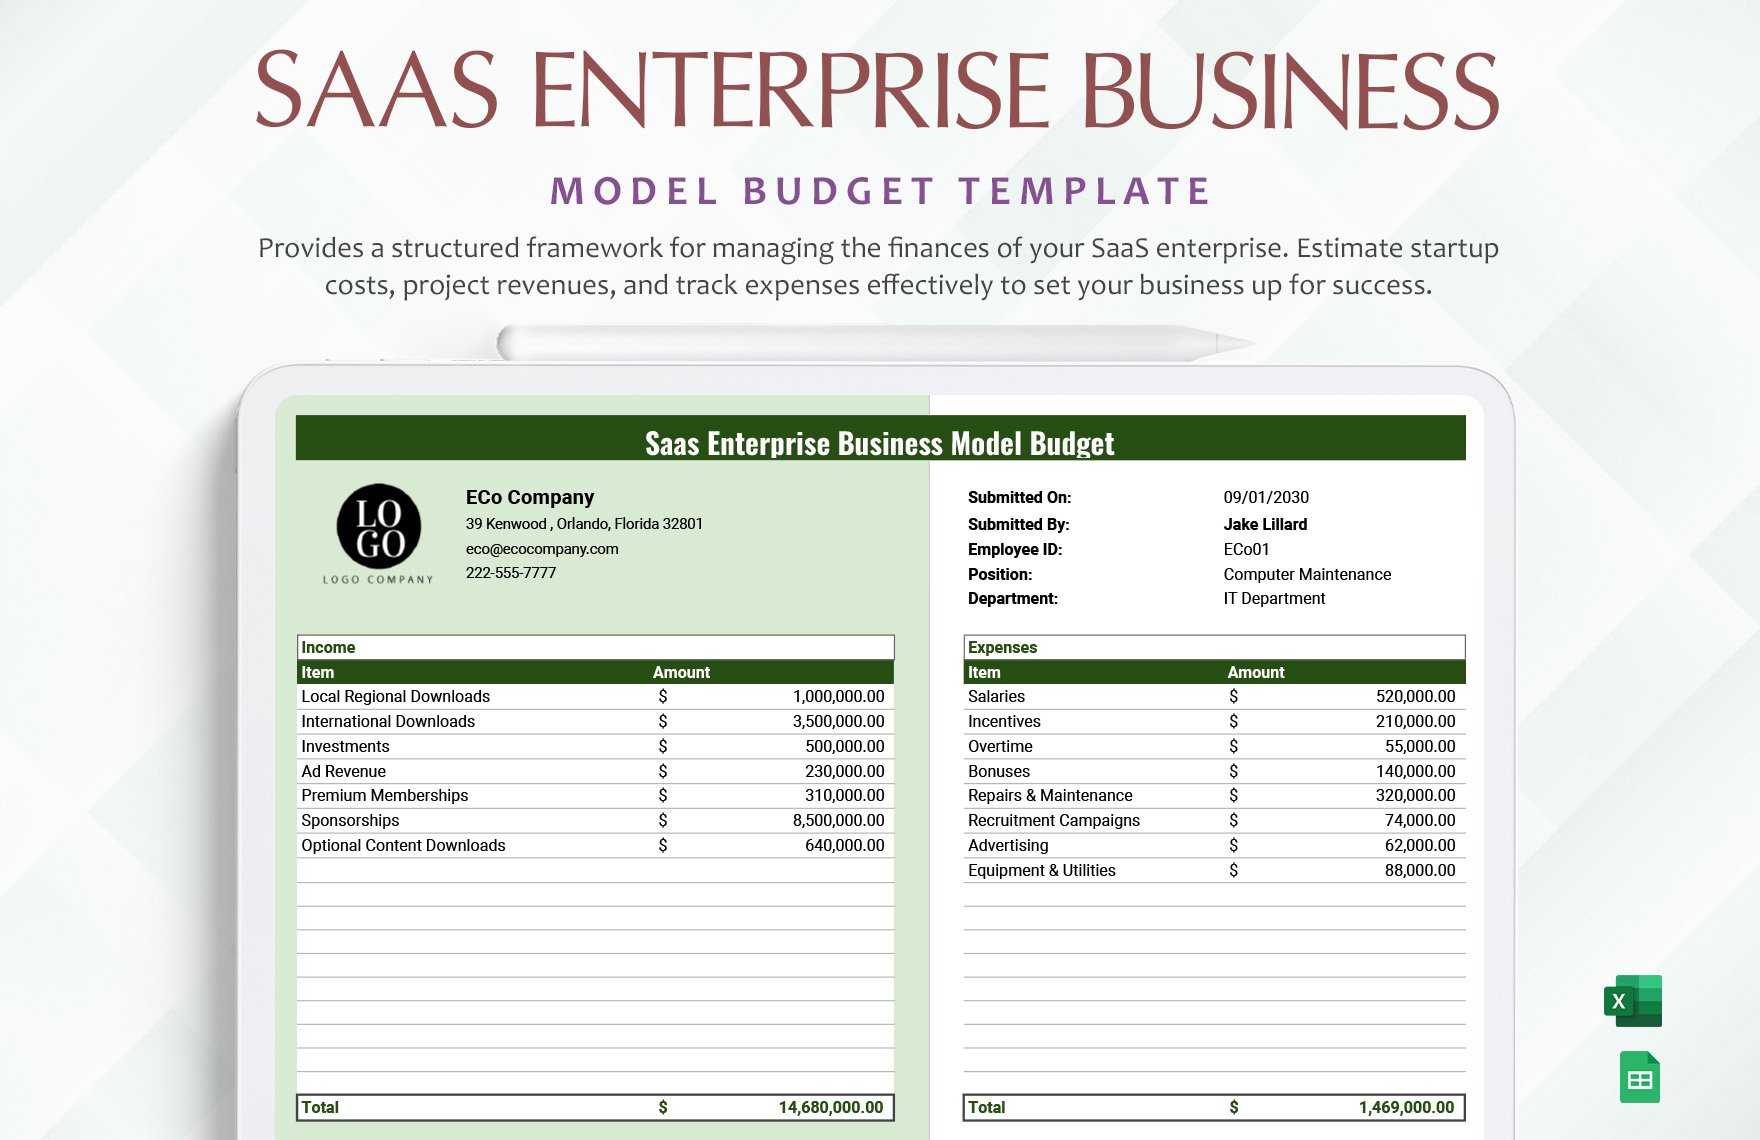 Free SaaS Enterprise Business Model Budget Template